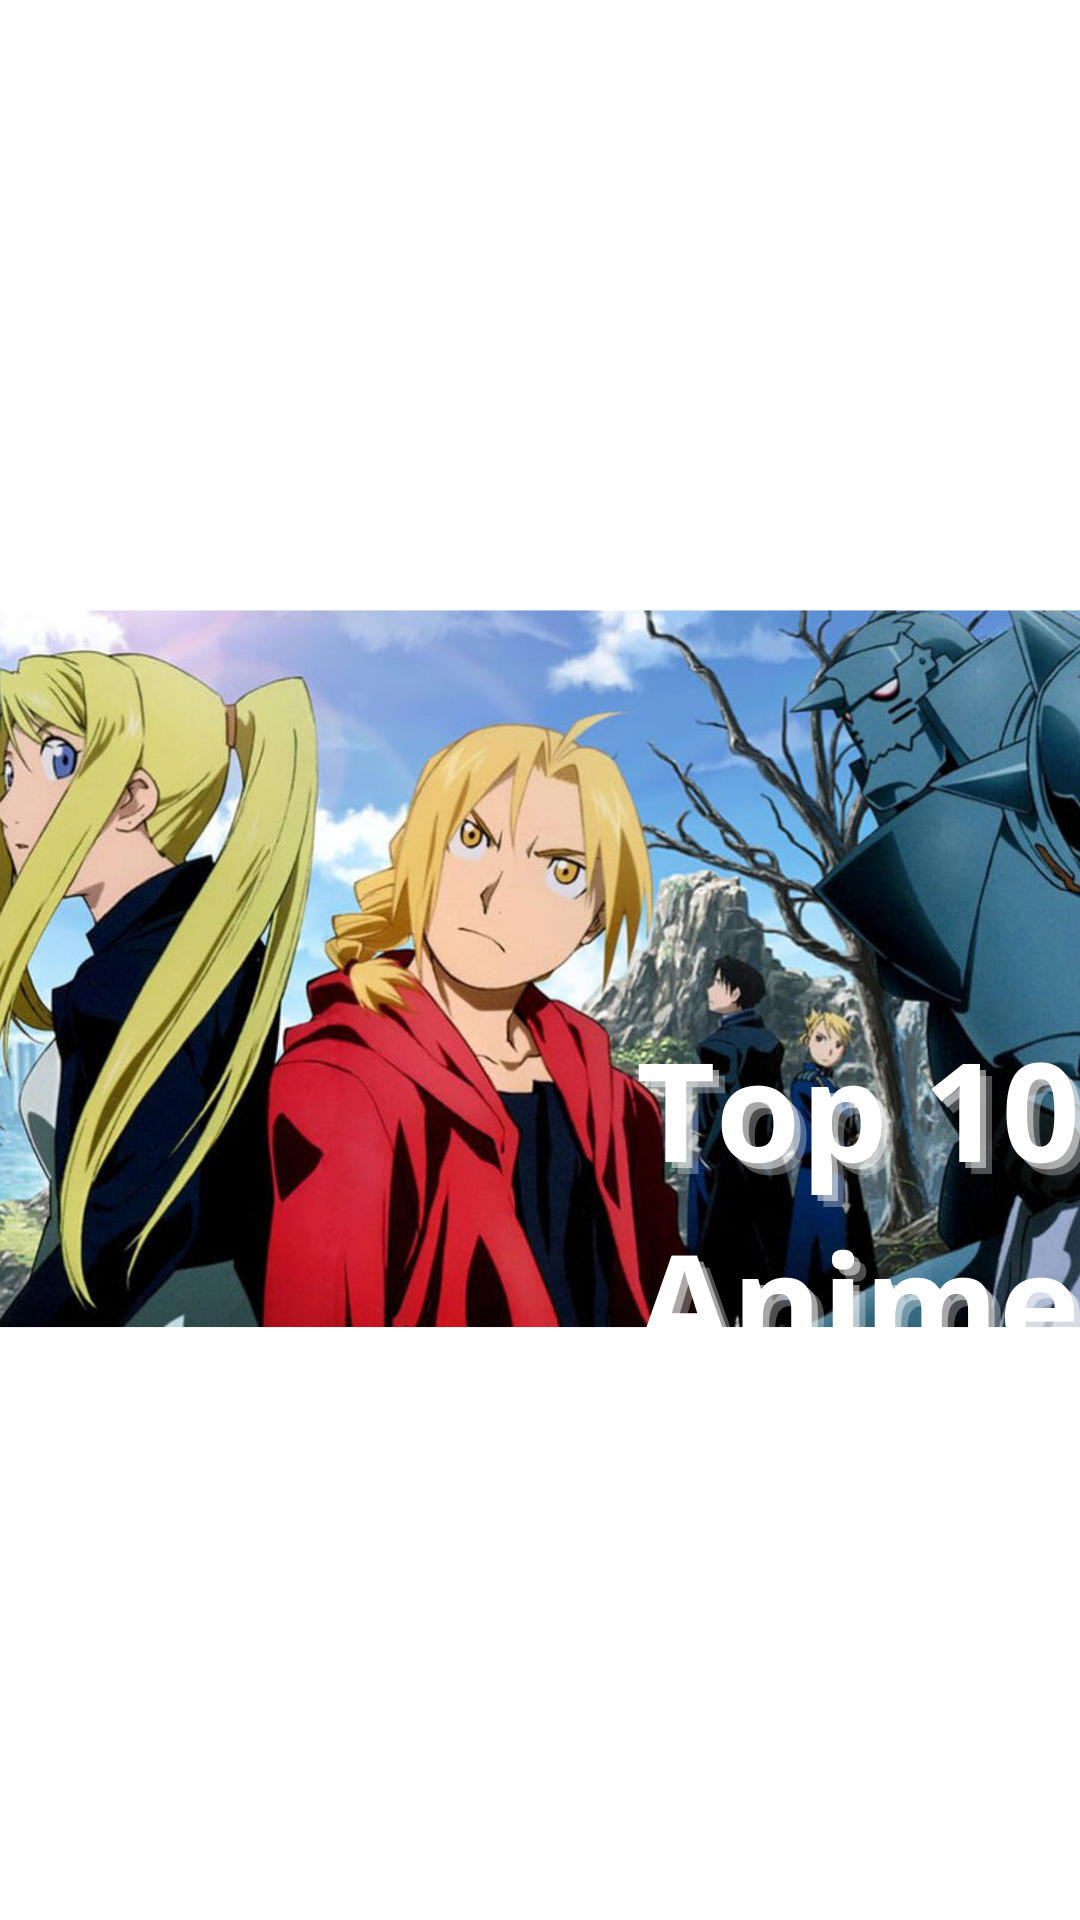 Top 10 Popular Animes